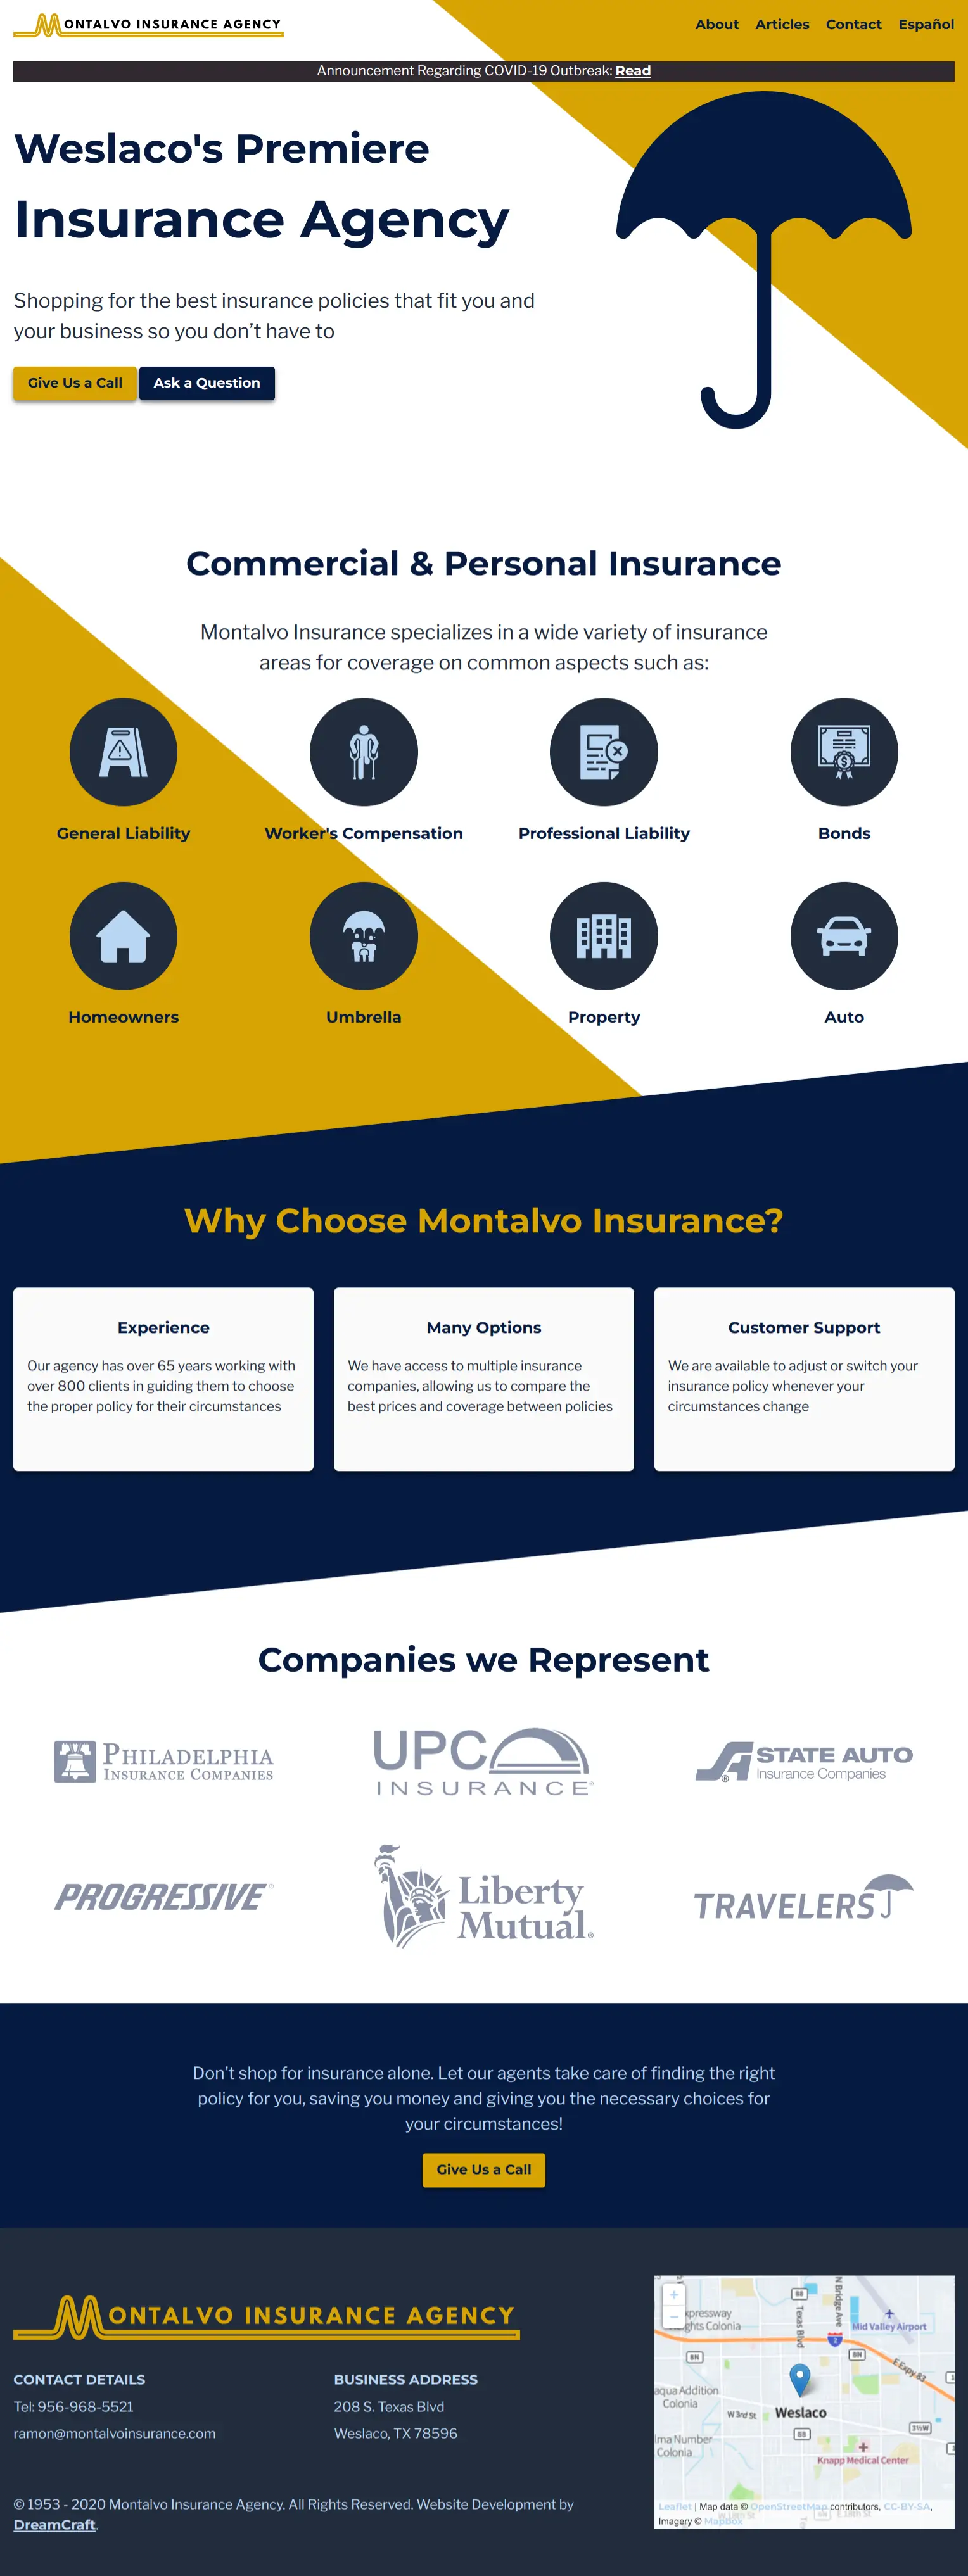 Montalvo Insurance Agency